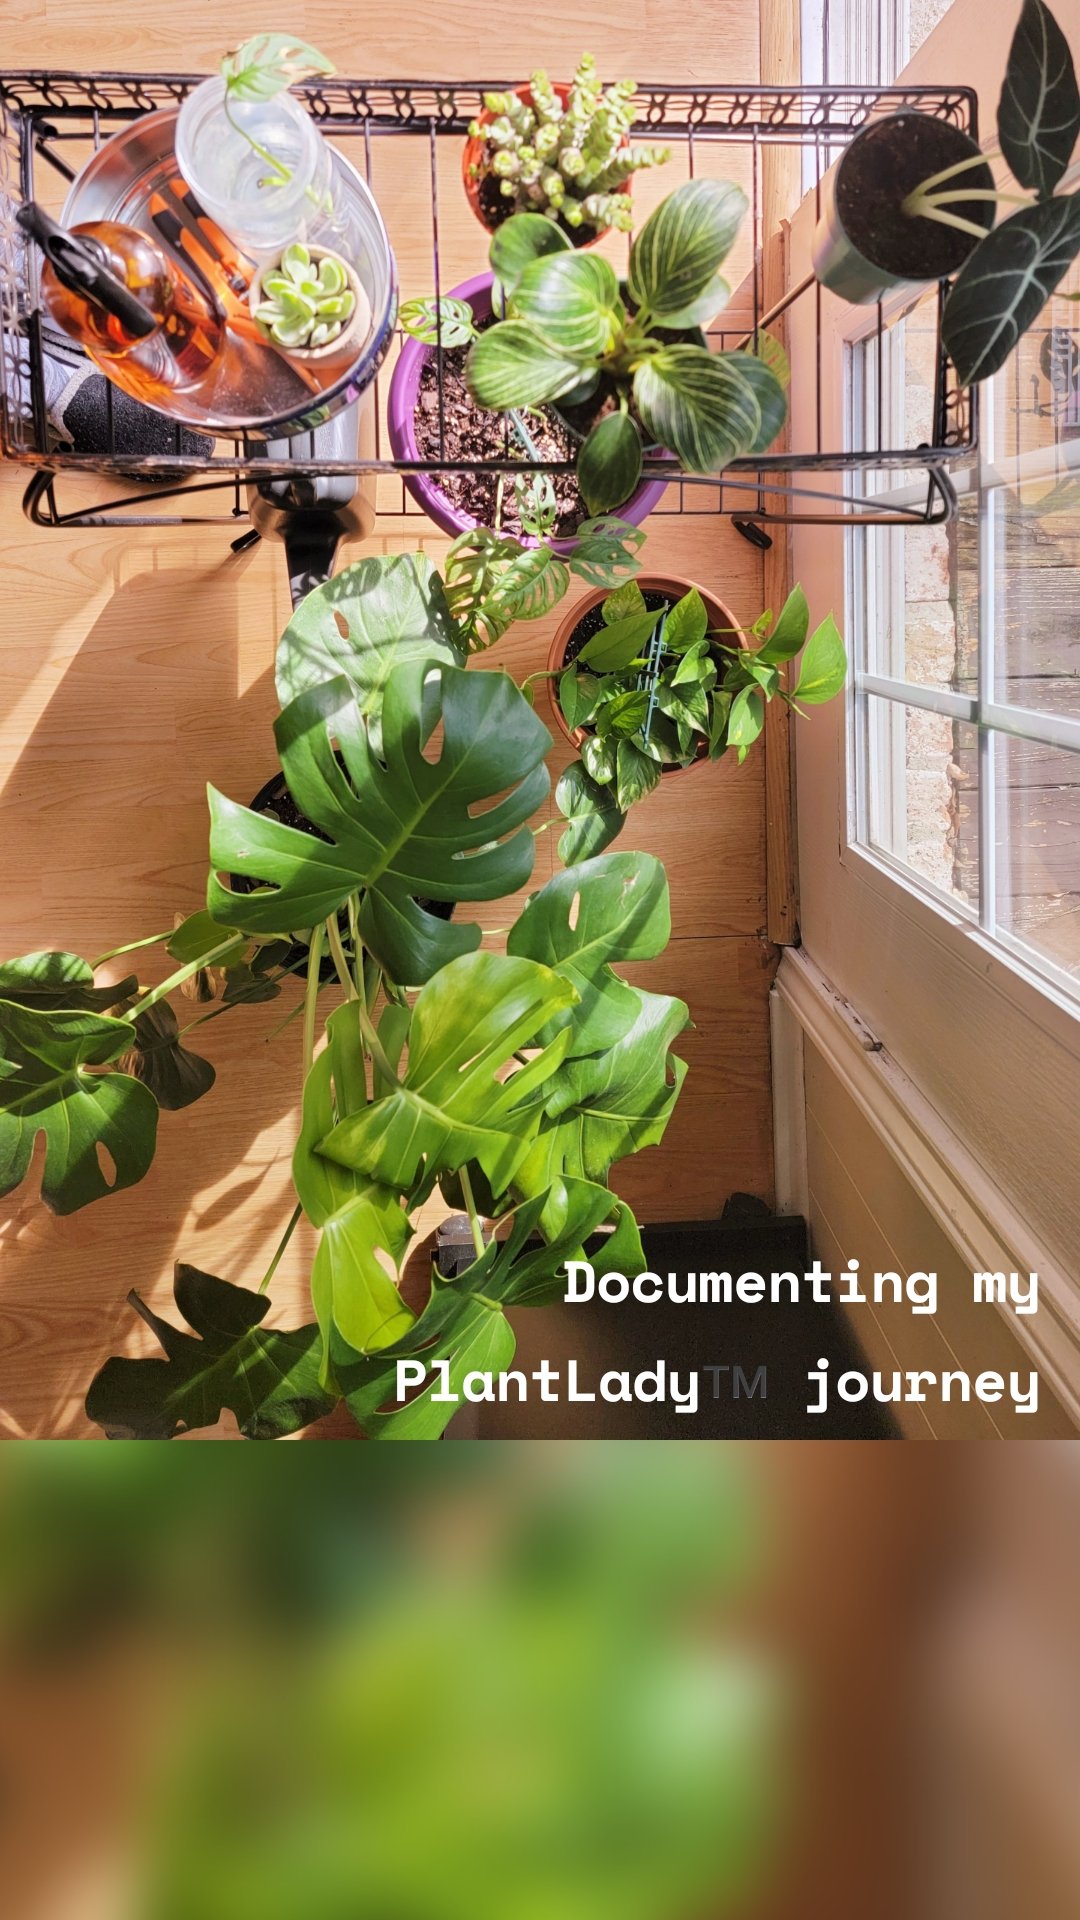 Documenting my PlantLady™️ journey